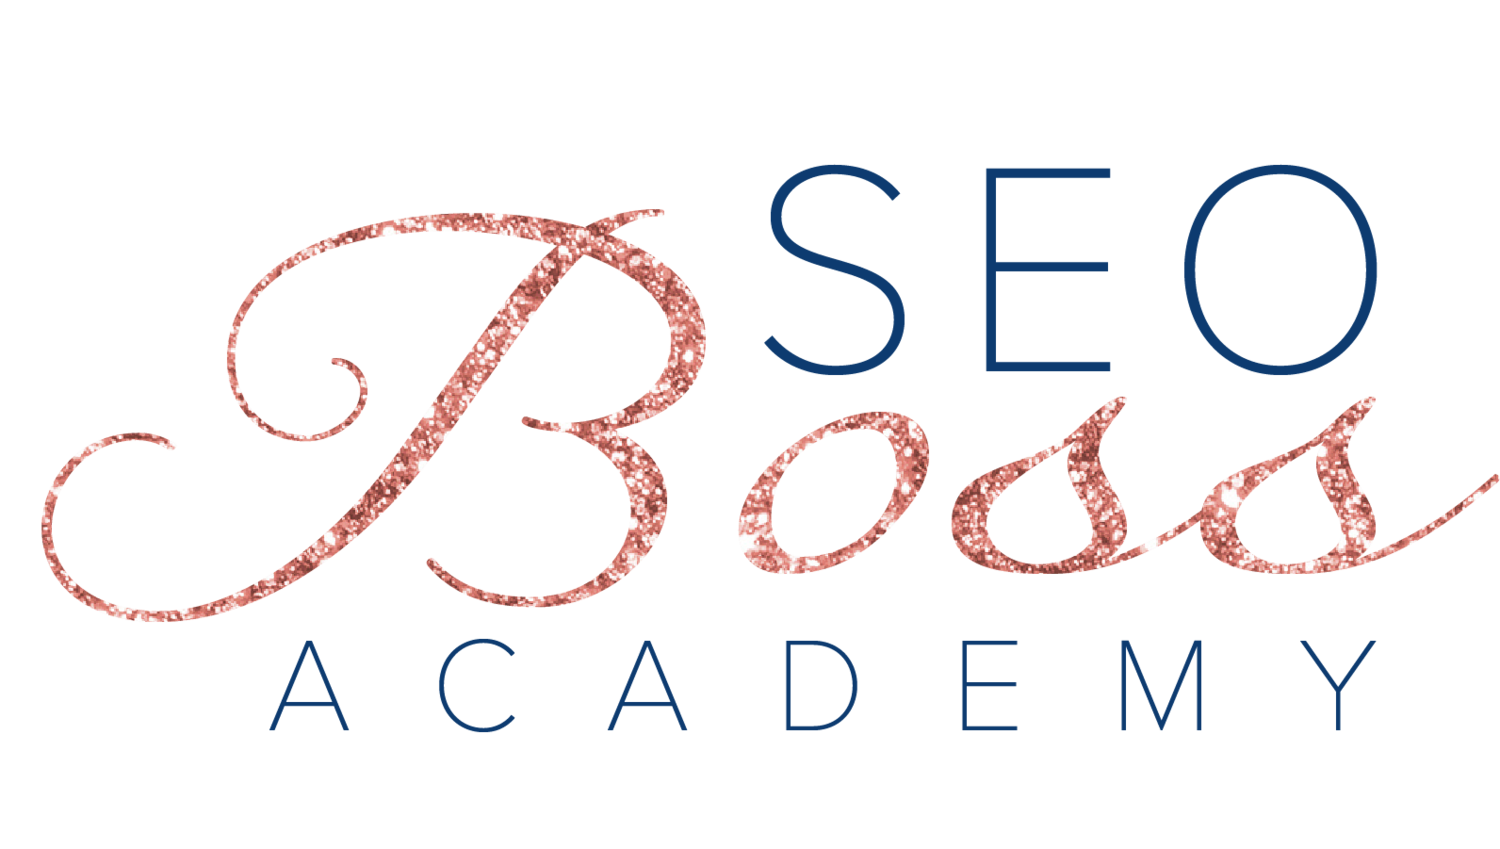 SEO Boss Academy